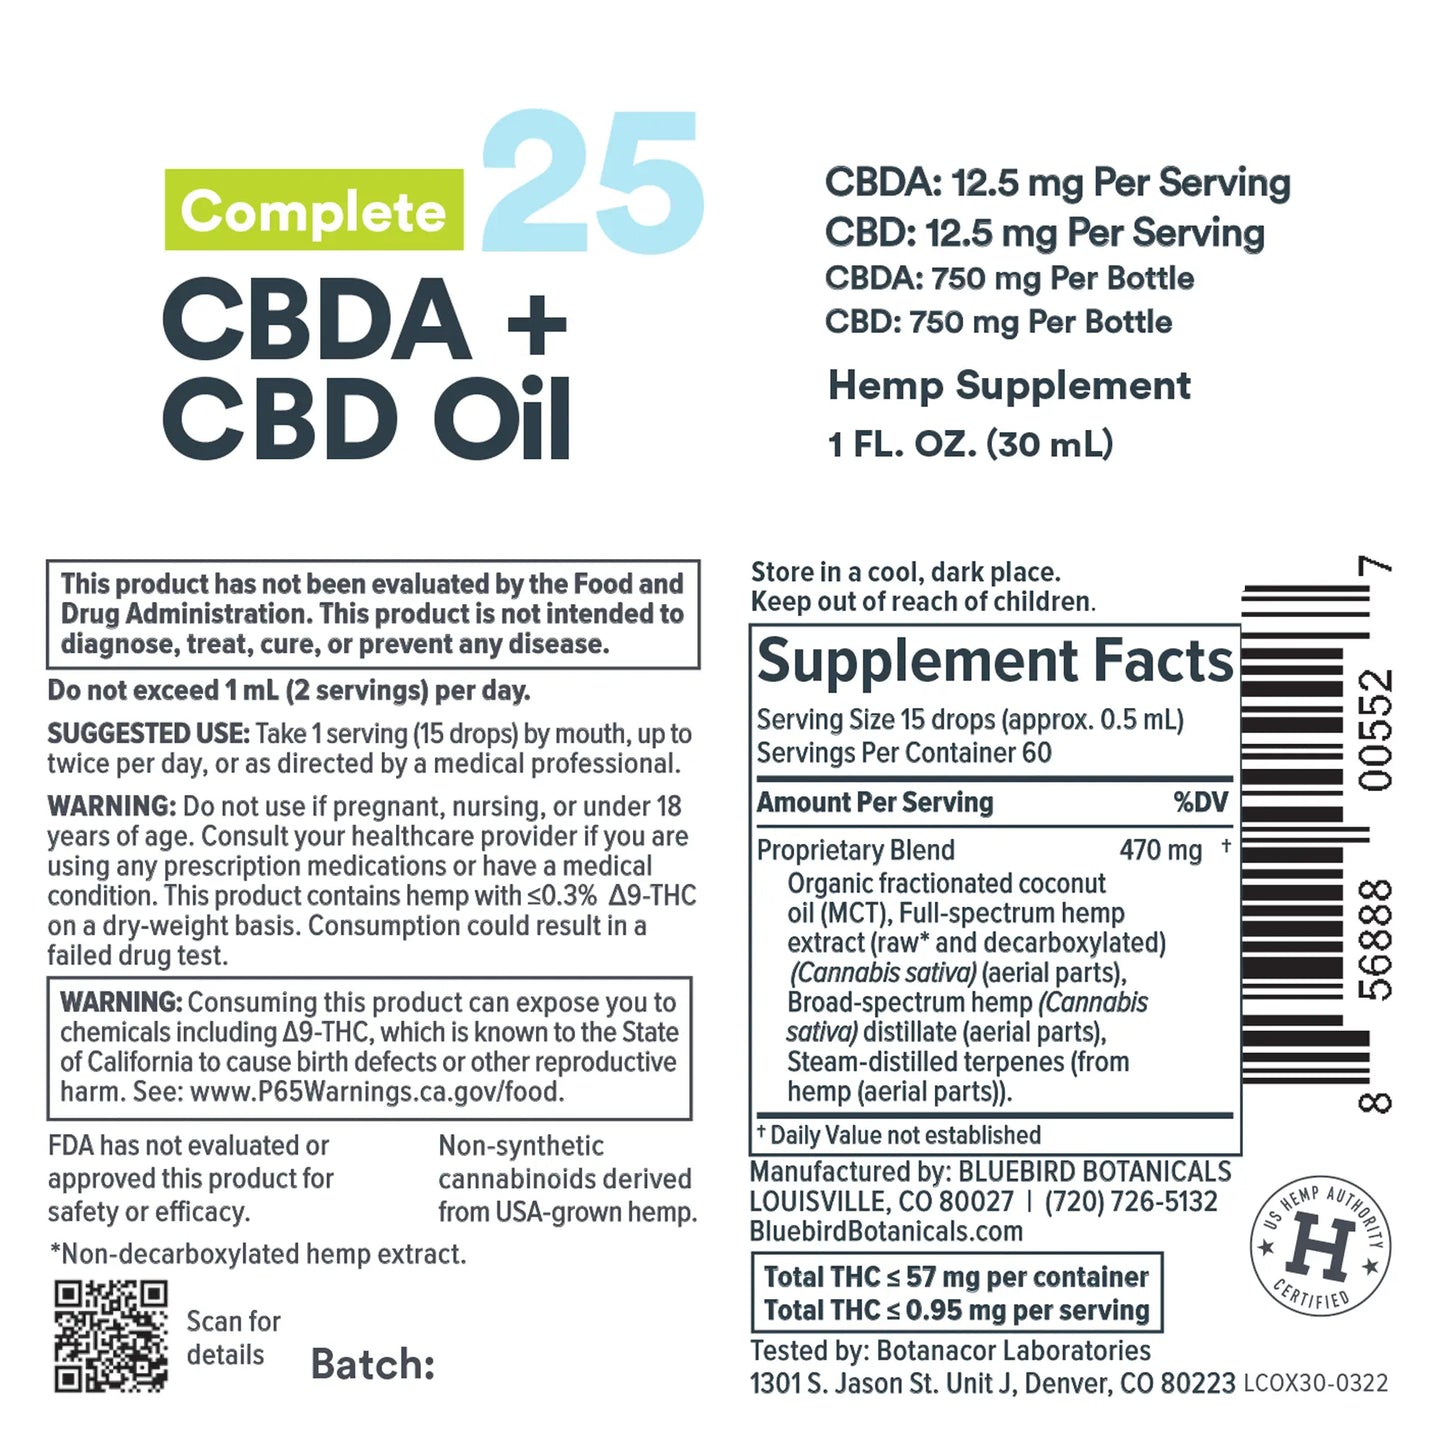 Complete CBDA + CBD Oil - Extra Strength (25 mg/serving)